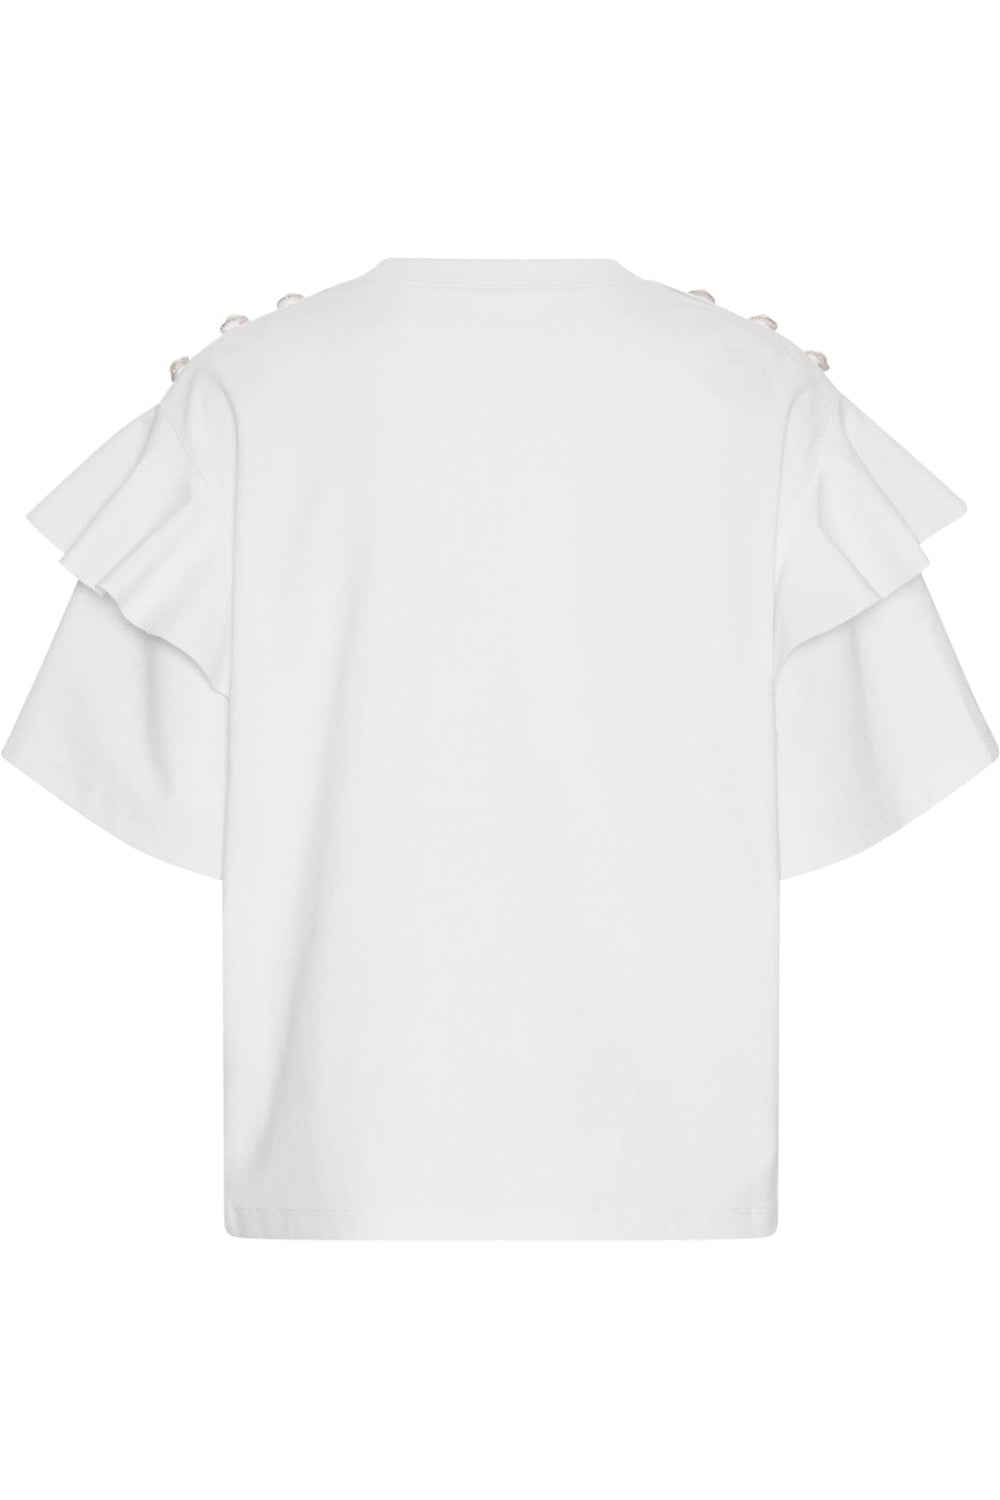 Custommade - Martina - 010 Whisper White T-shirts 